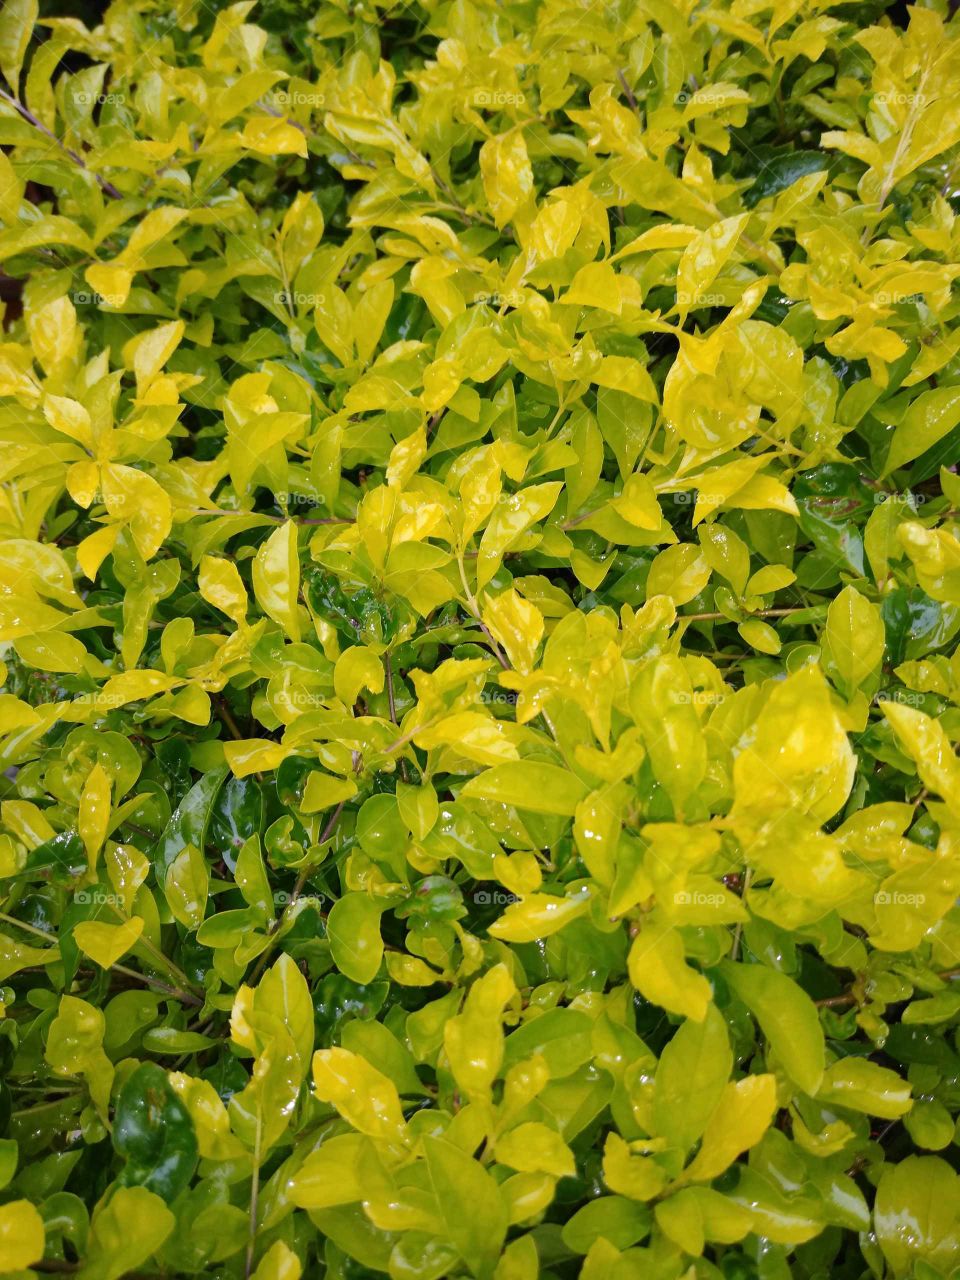 yellowish green leaves